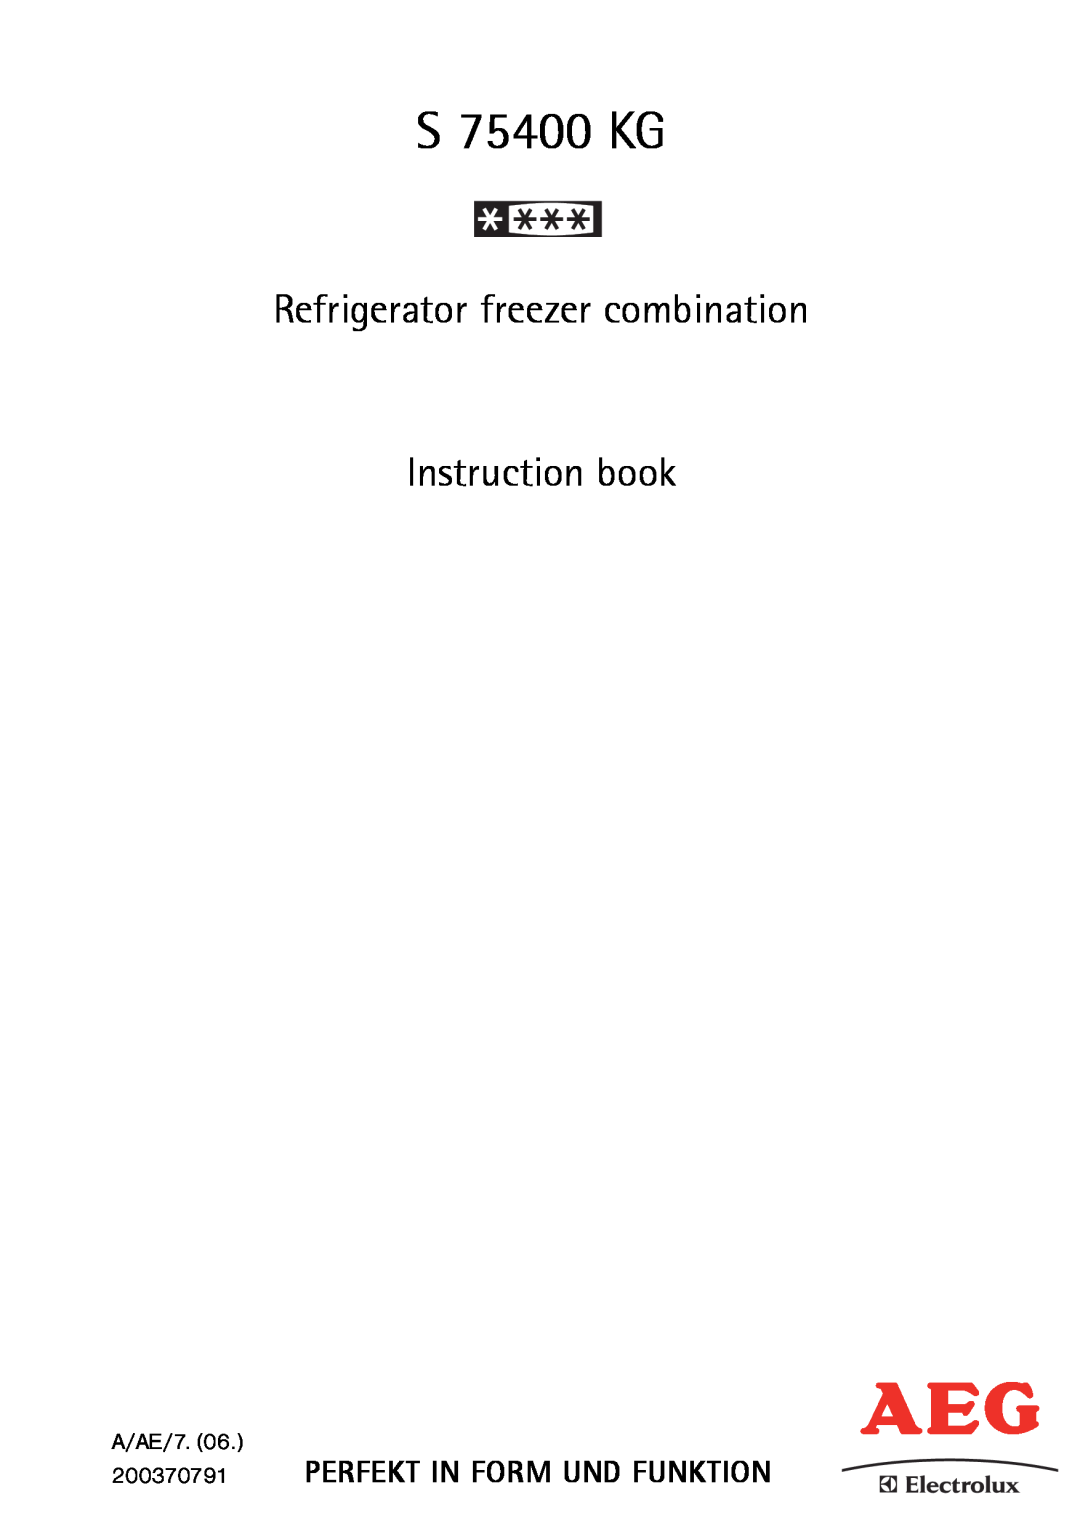 Electrolux S 75400 KG manual Refrigerator freezer combination Instruction book, Perfekt In Form Und Funktion 